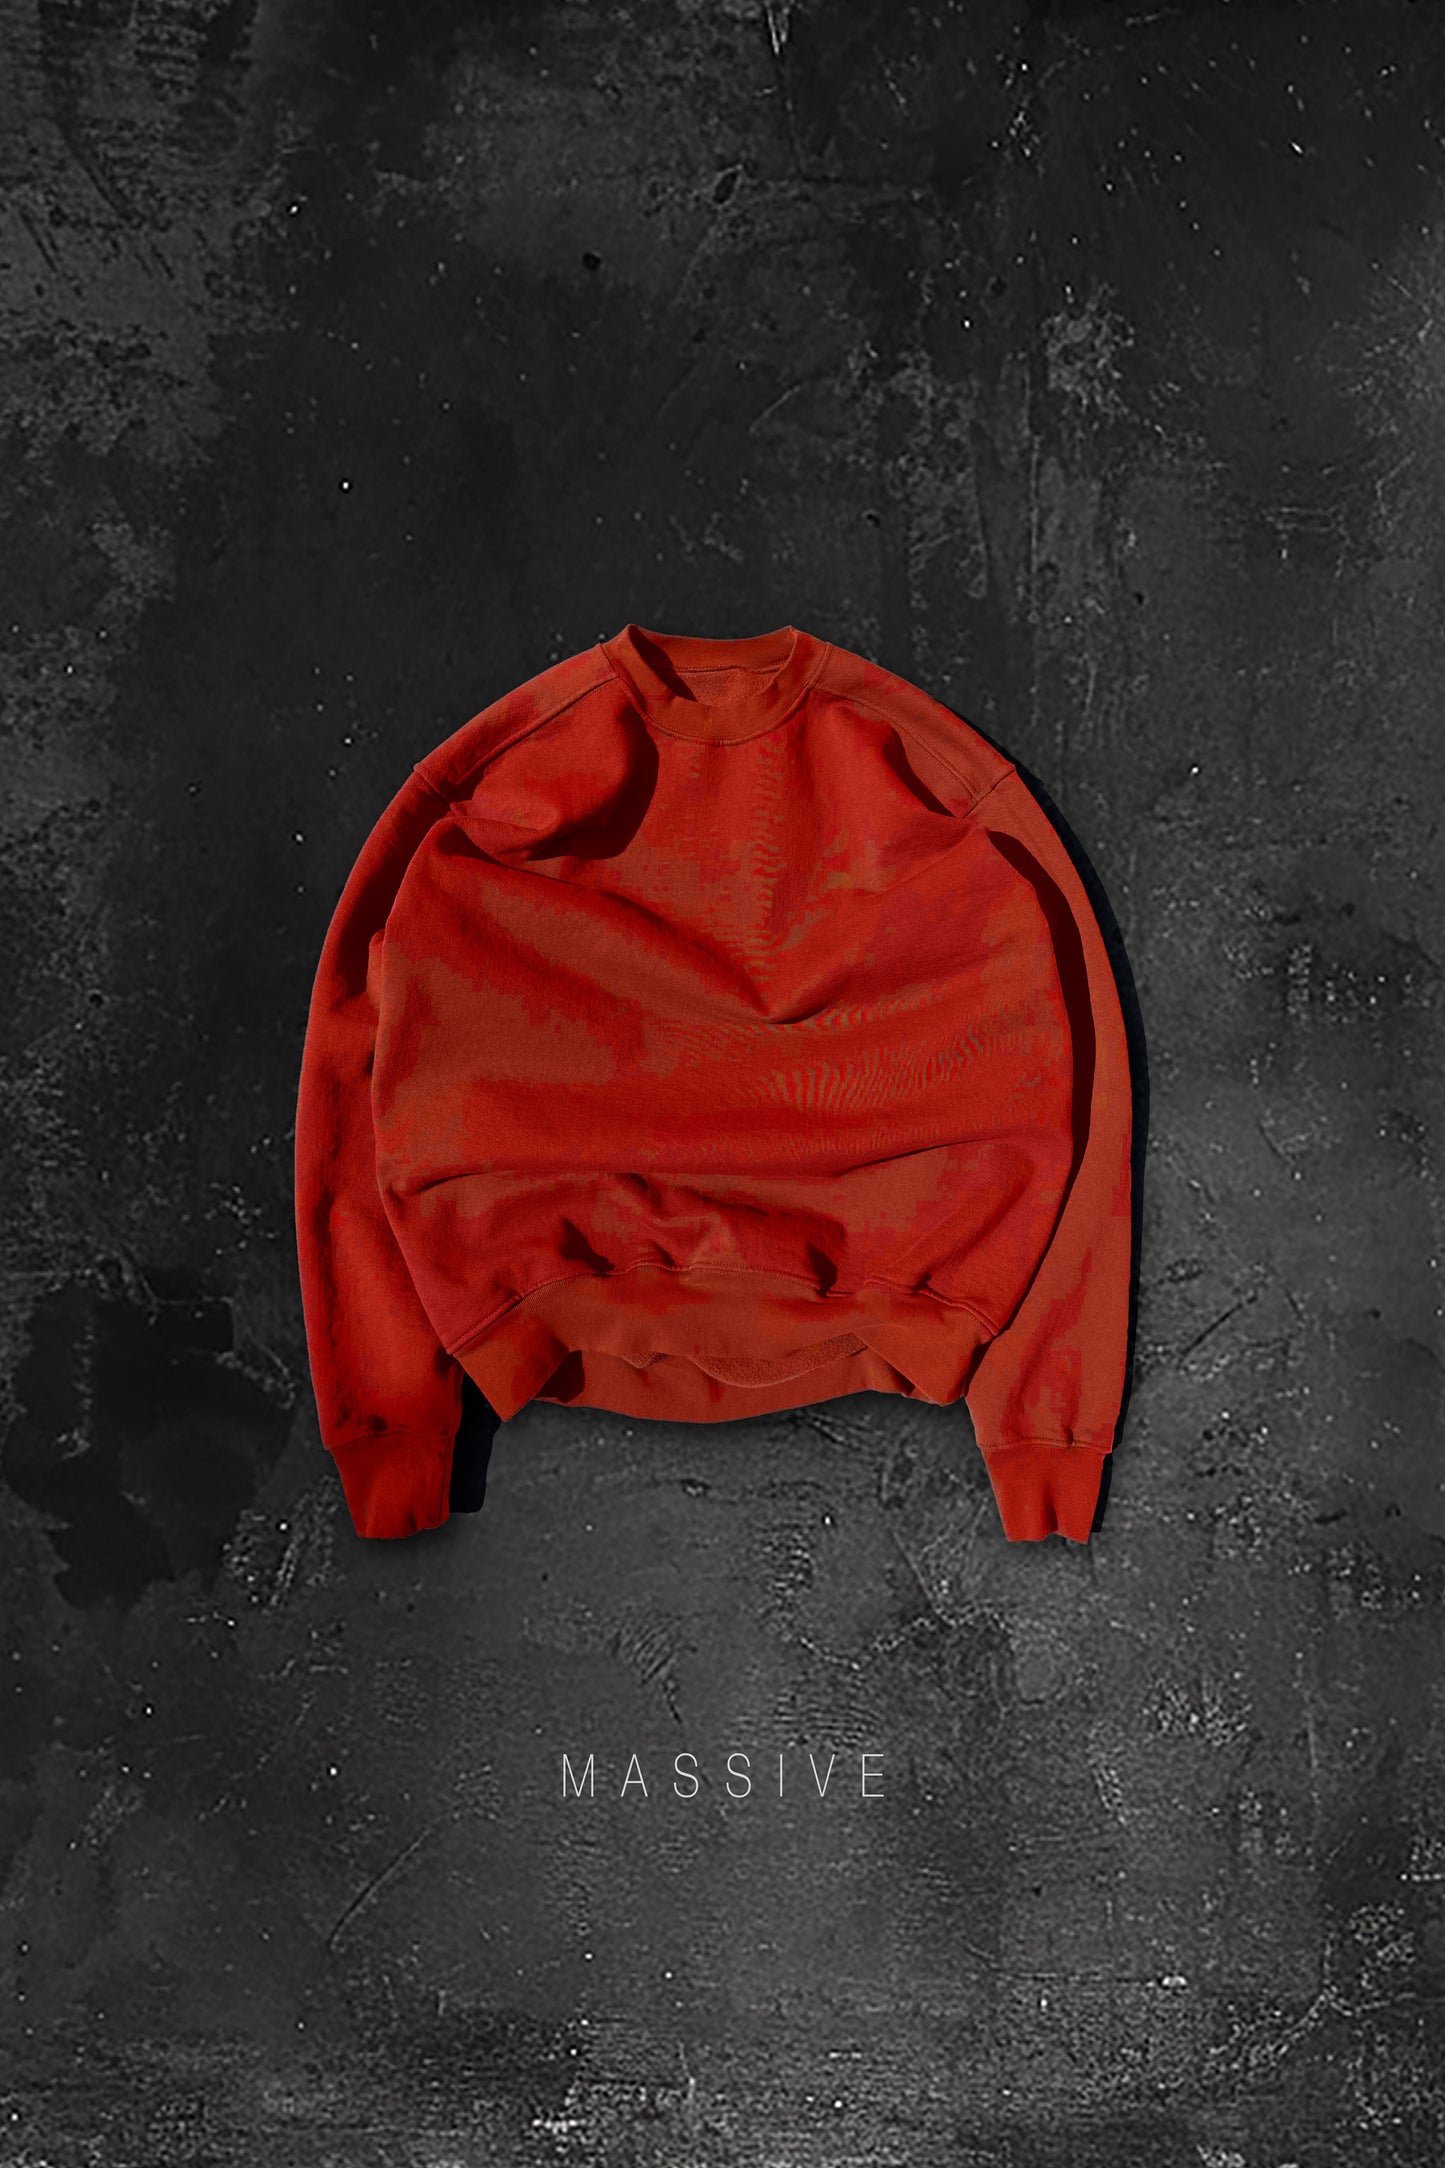 ⭐️ New MASSIVE Sweatshirt